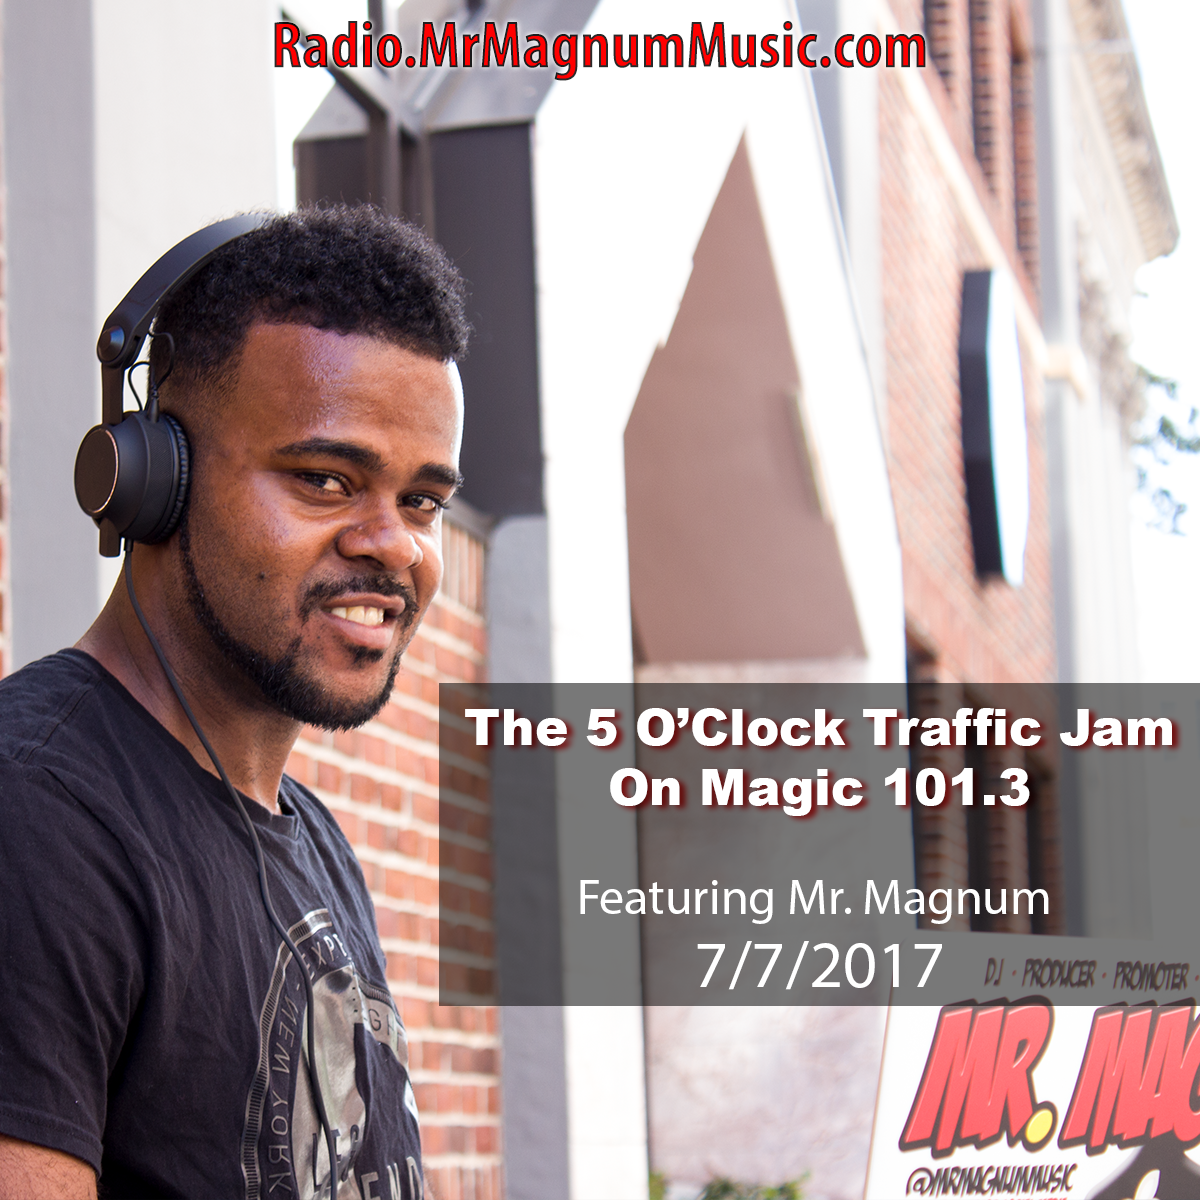 The 5 O'Clock Traffic Jam 20170707 featuring Gainesville's #1 DJ, Mr. Magnum on Magic 101.3